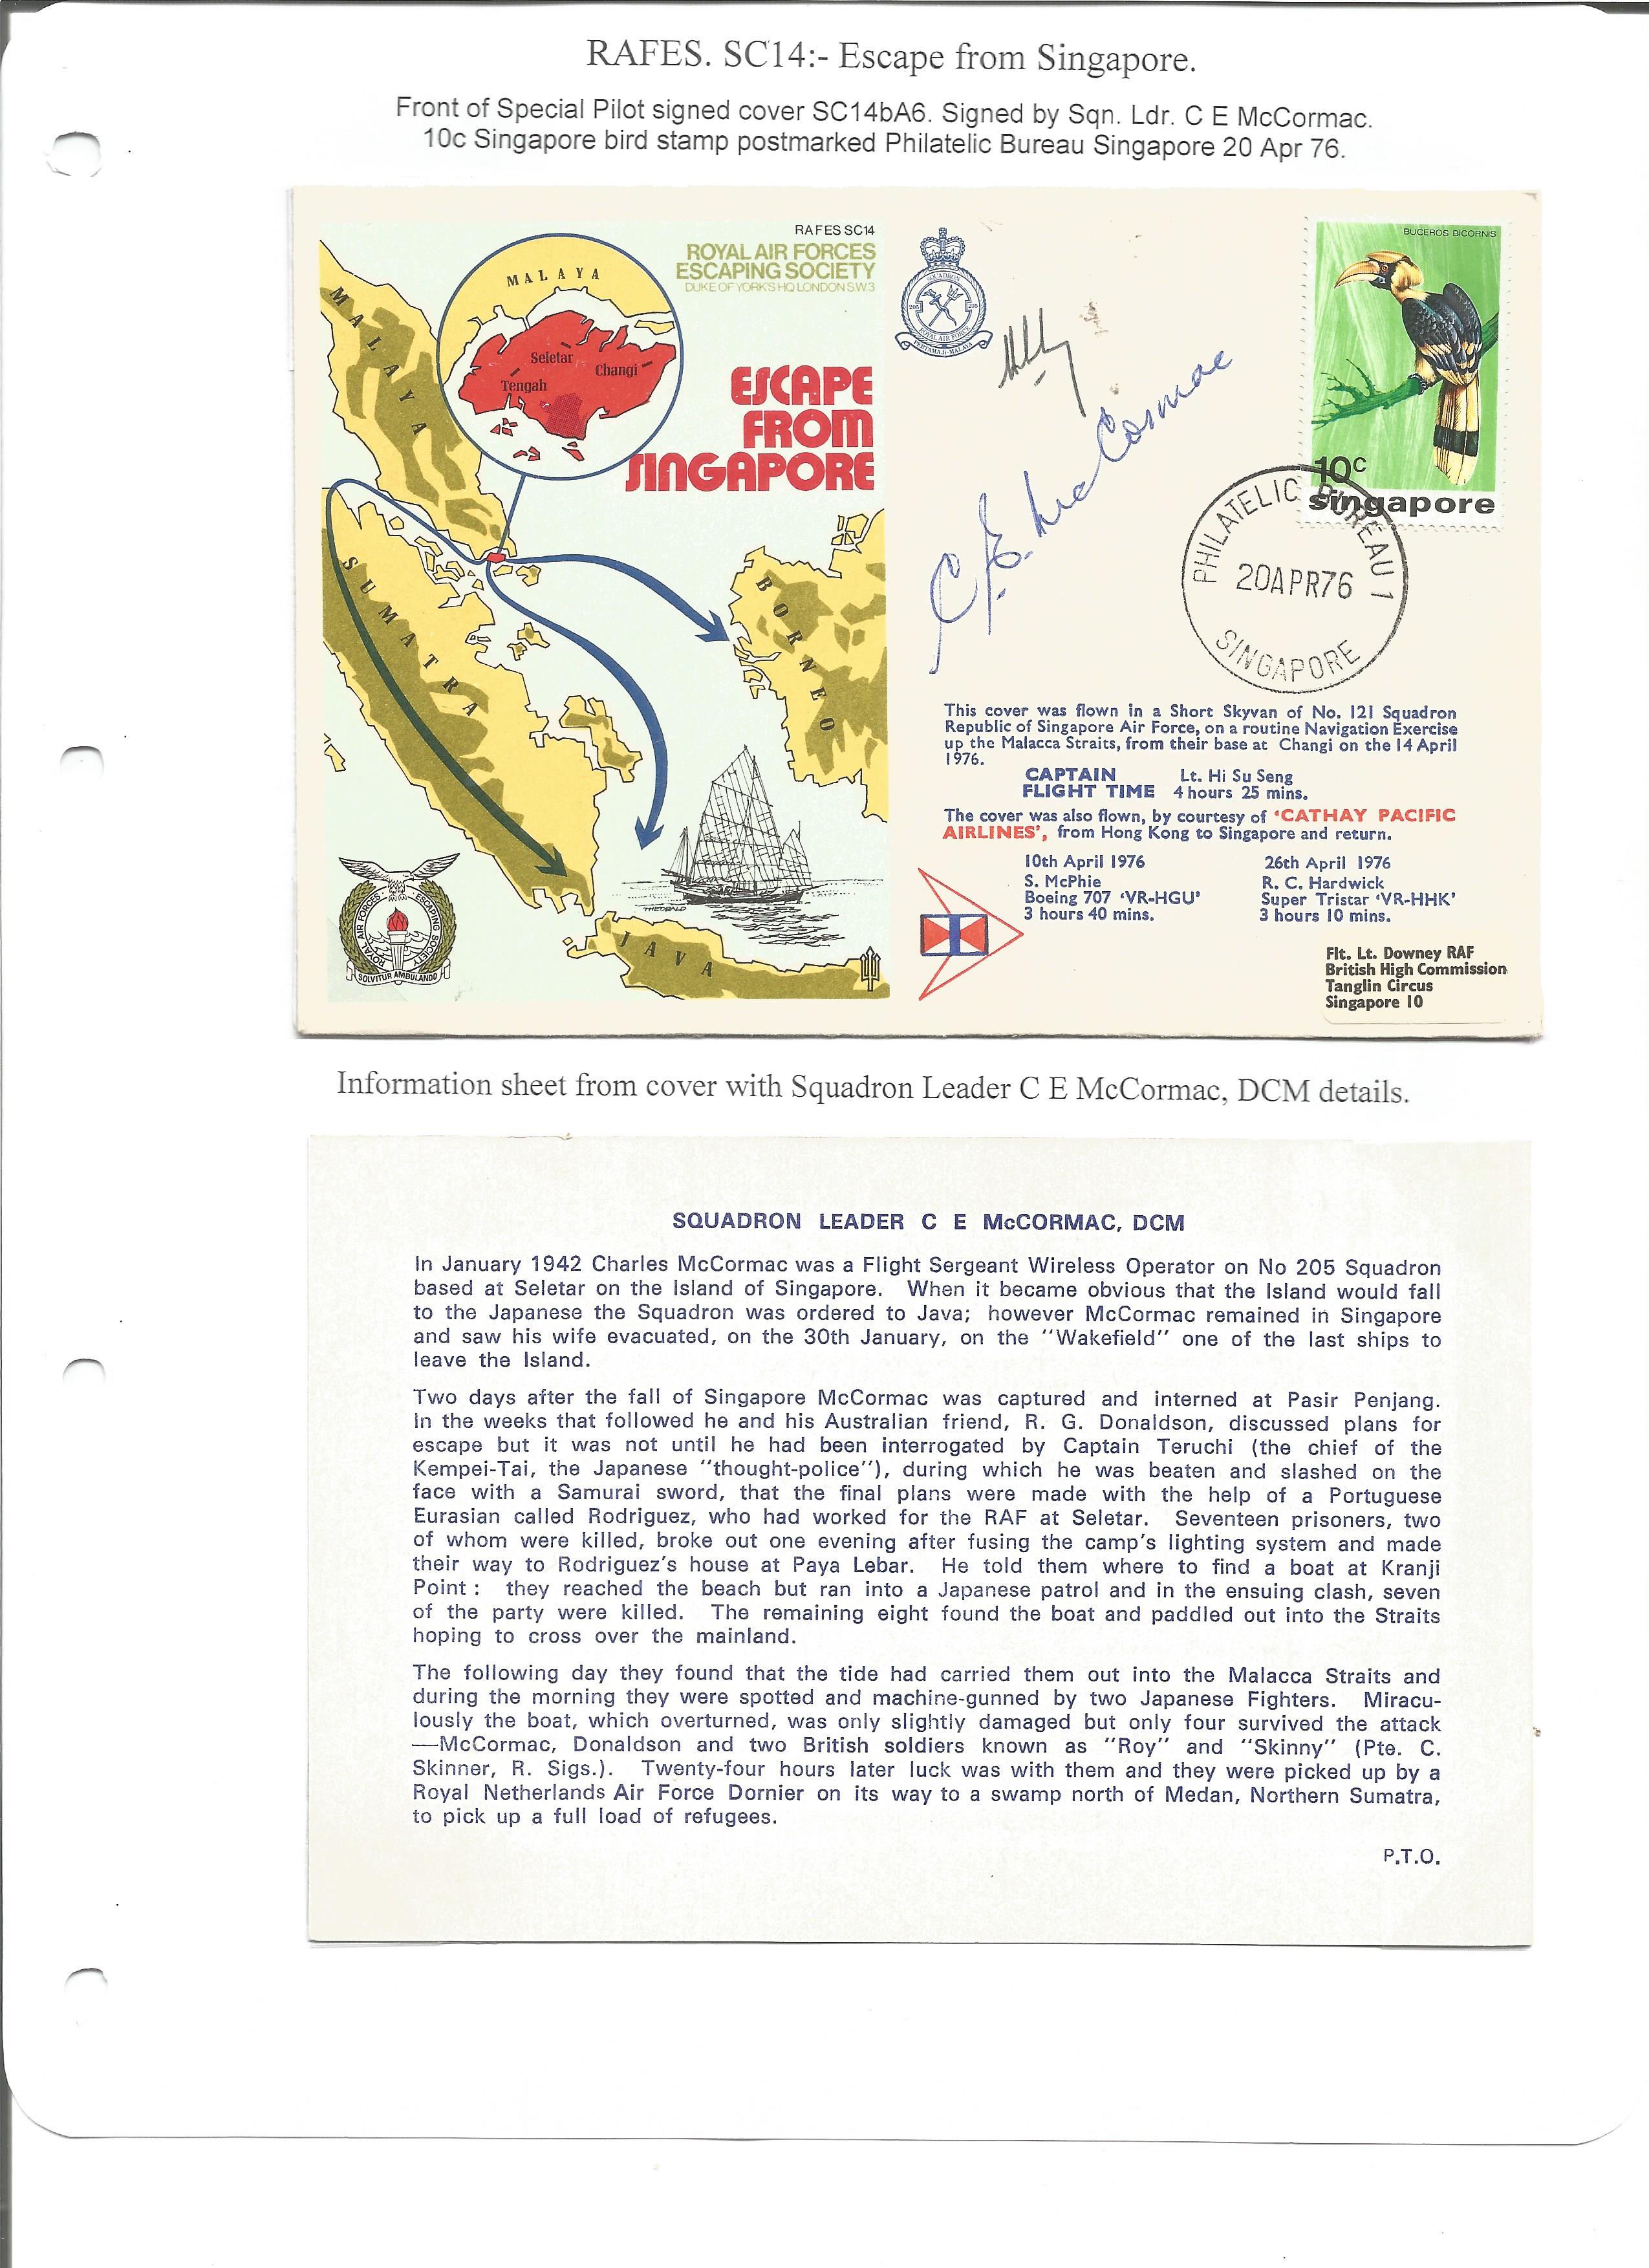 Sqn Ldr C E McCormac signed RAF escapers special cover SC14bA6. 10c Singapore bird stamp